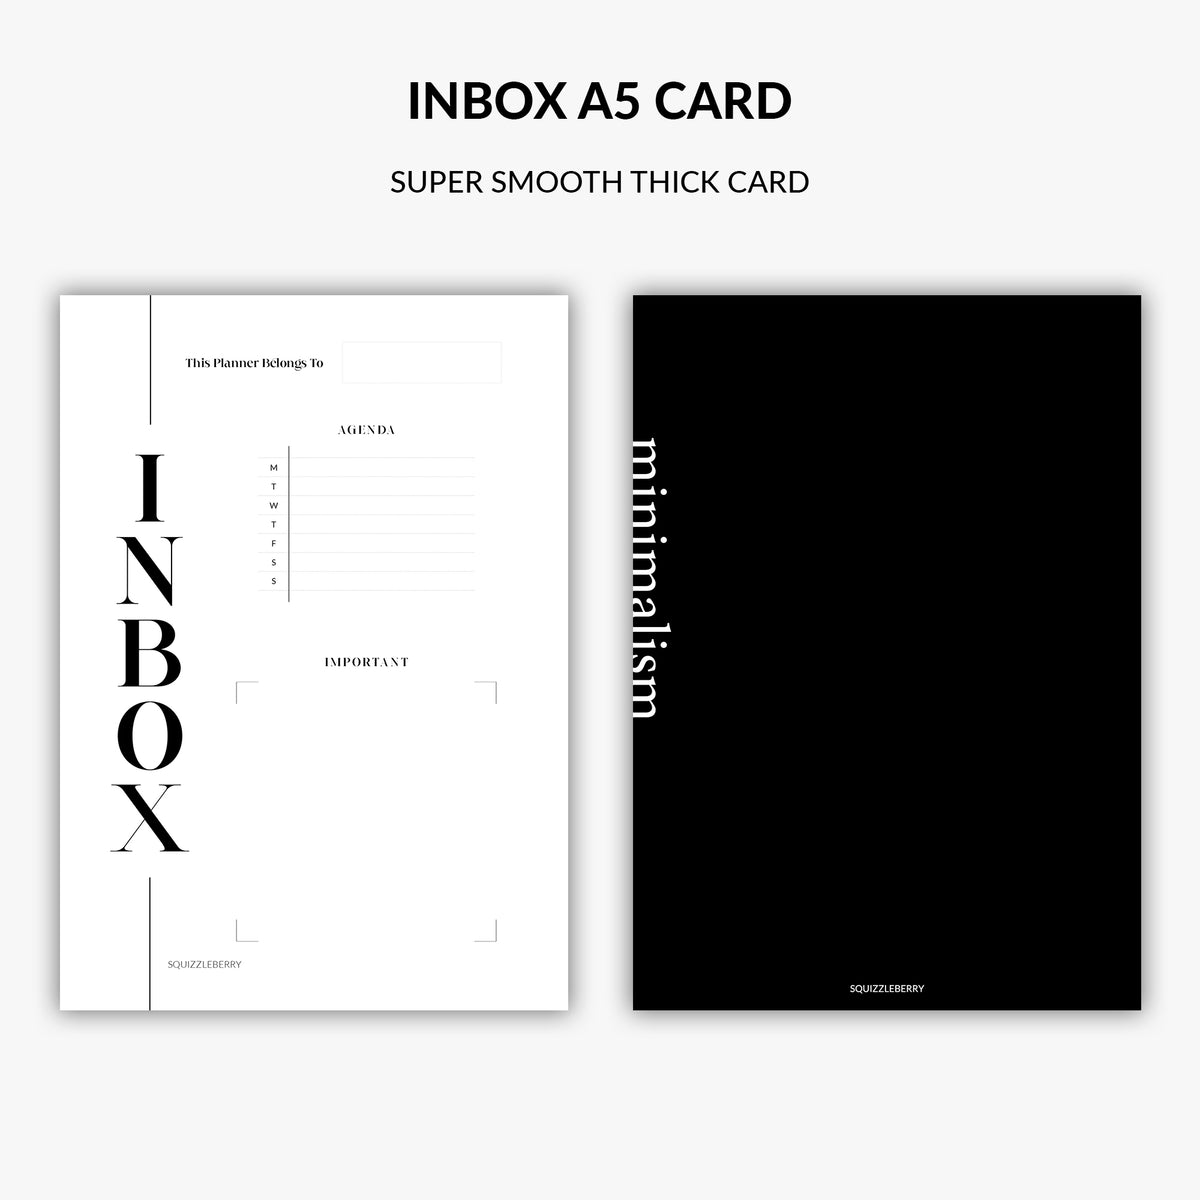 Inbox A5 Card